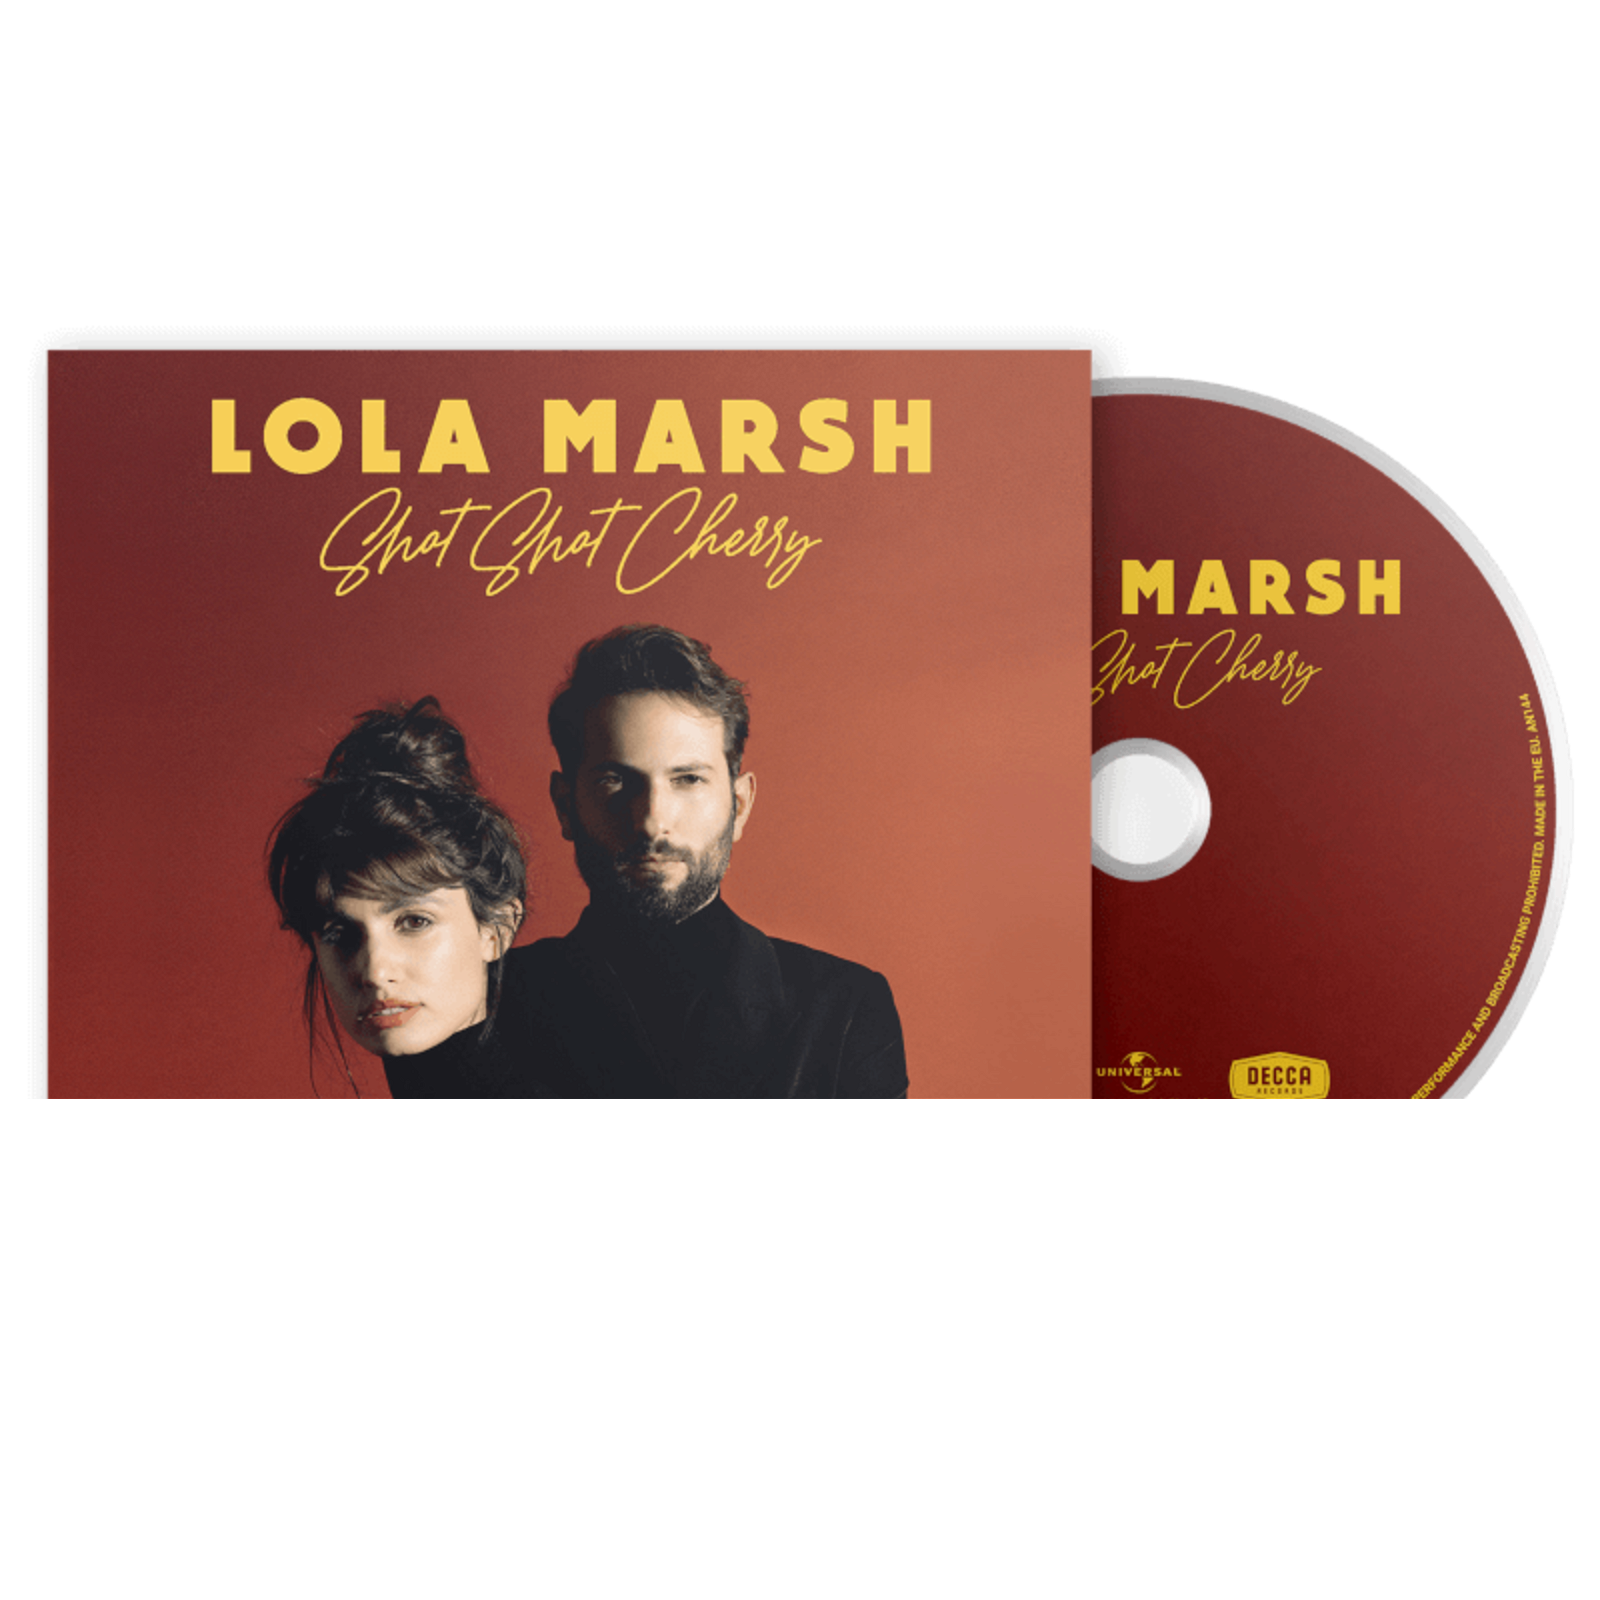 CD Shop - LOLA MARSH SHOT SHOT CHERRY